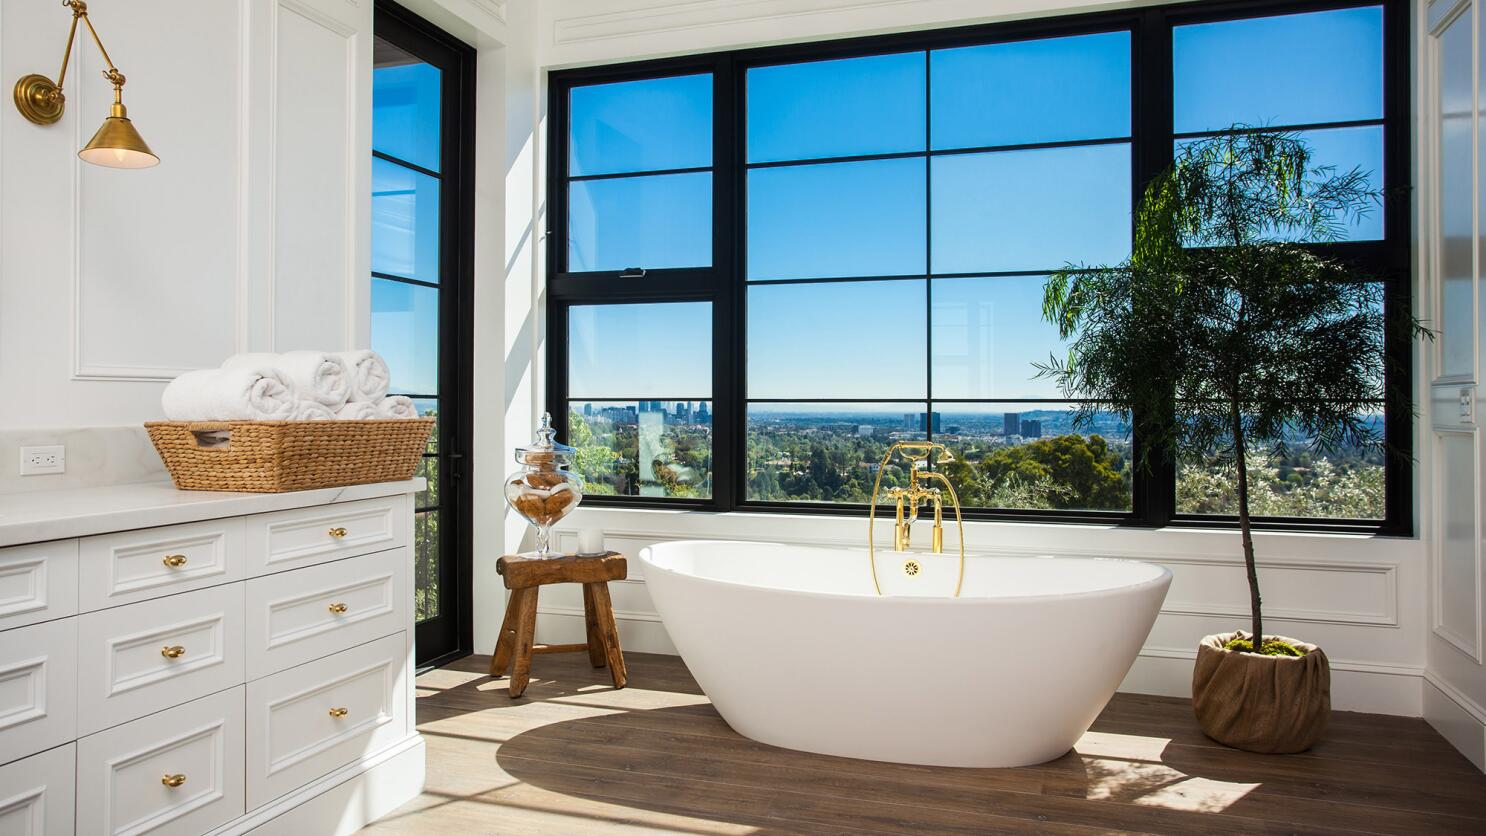 Bathtubs Make a Splash: The Return of Luxurious Soaking Experiences